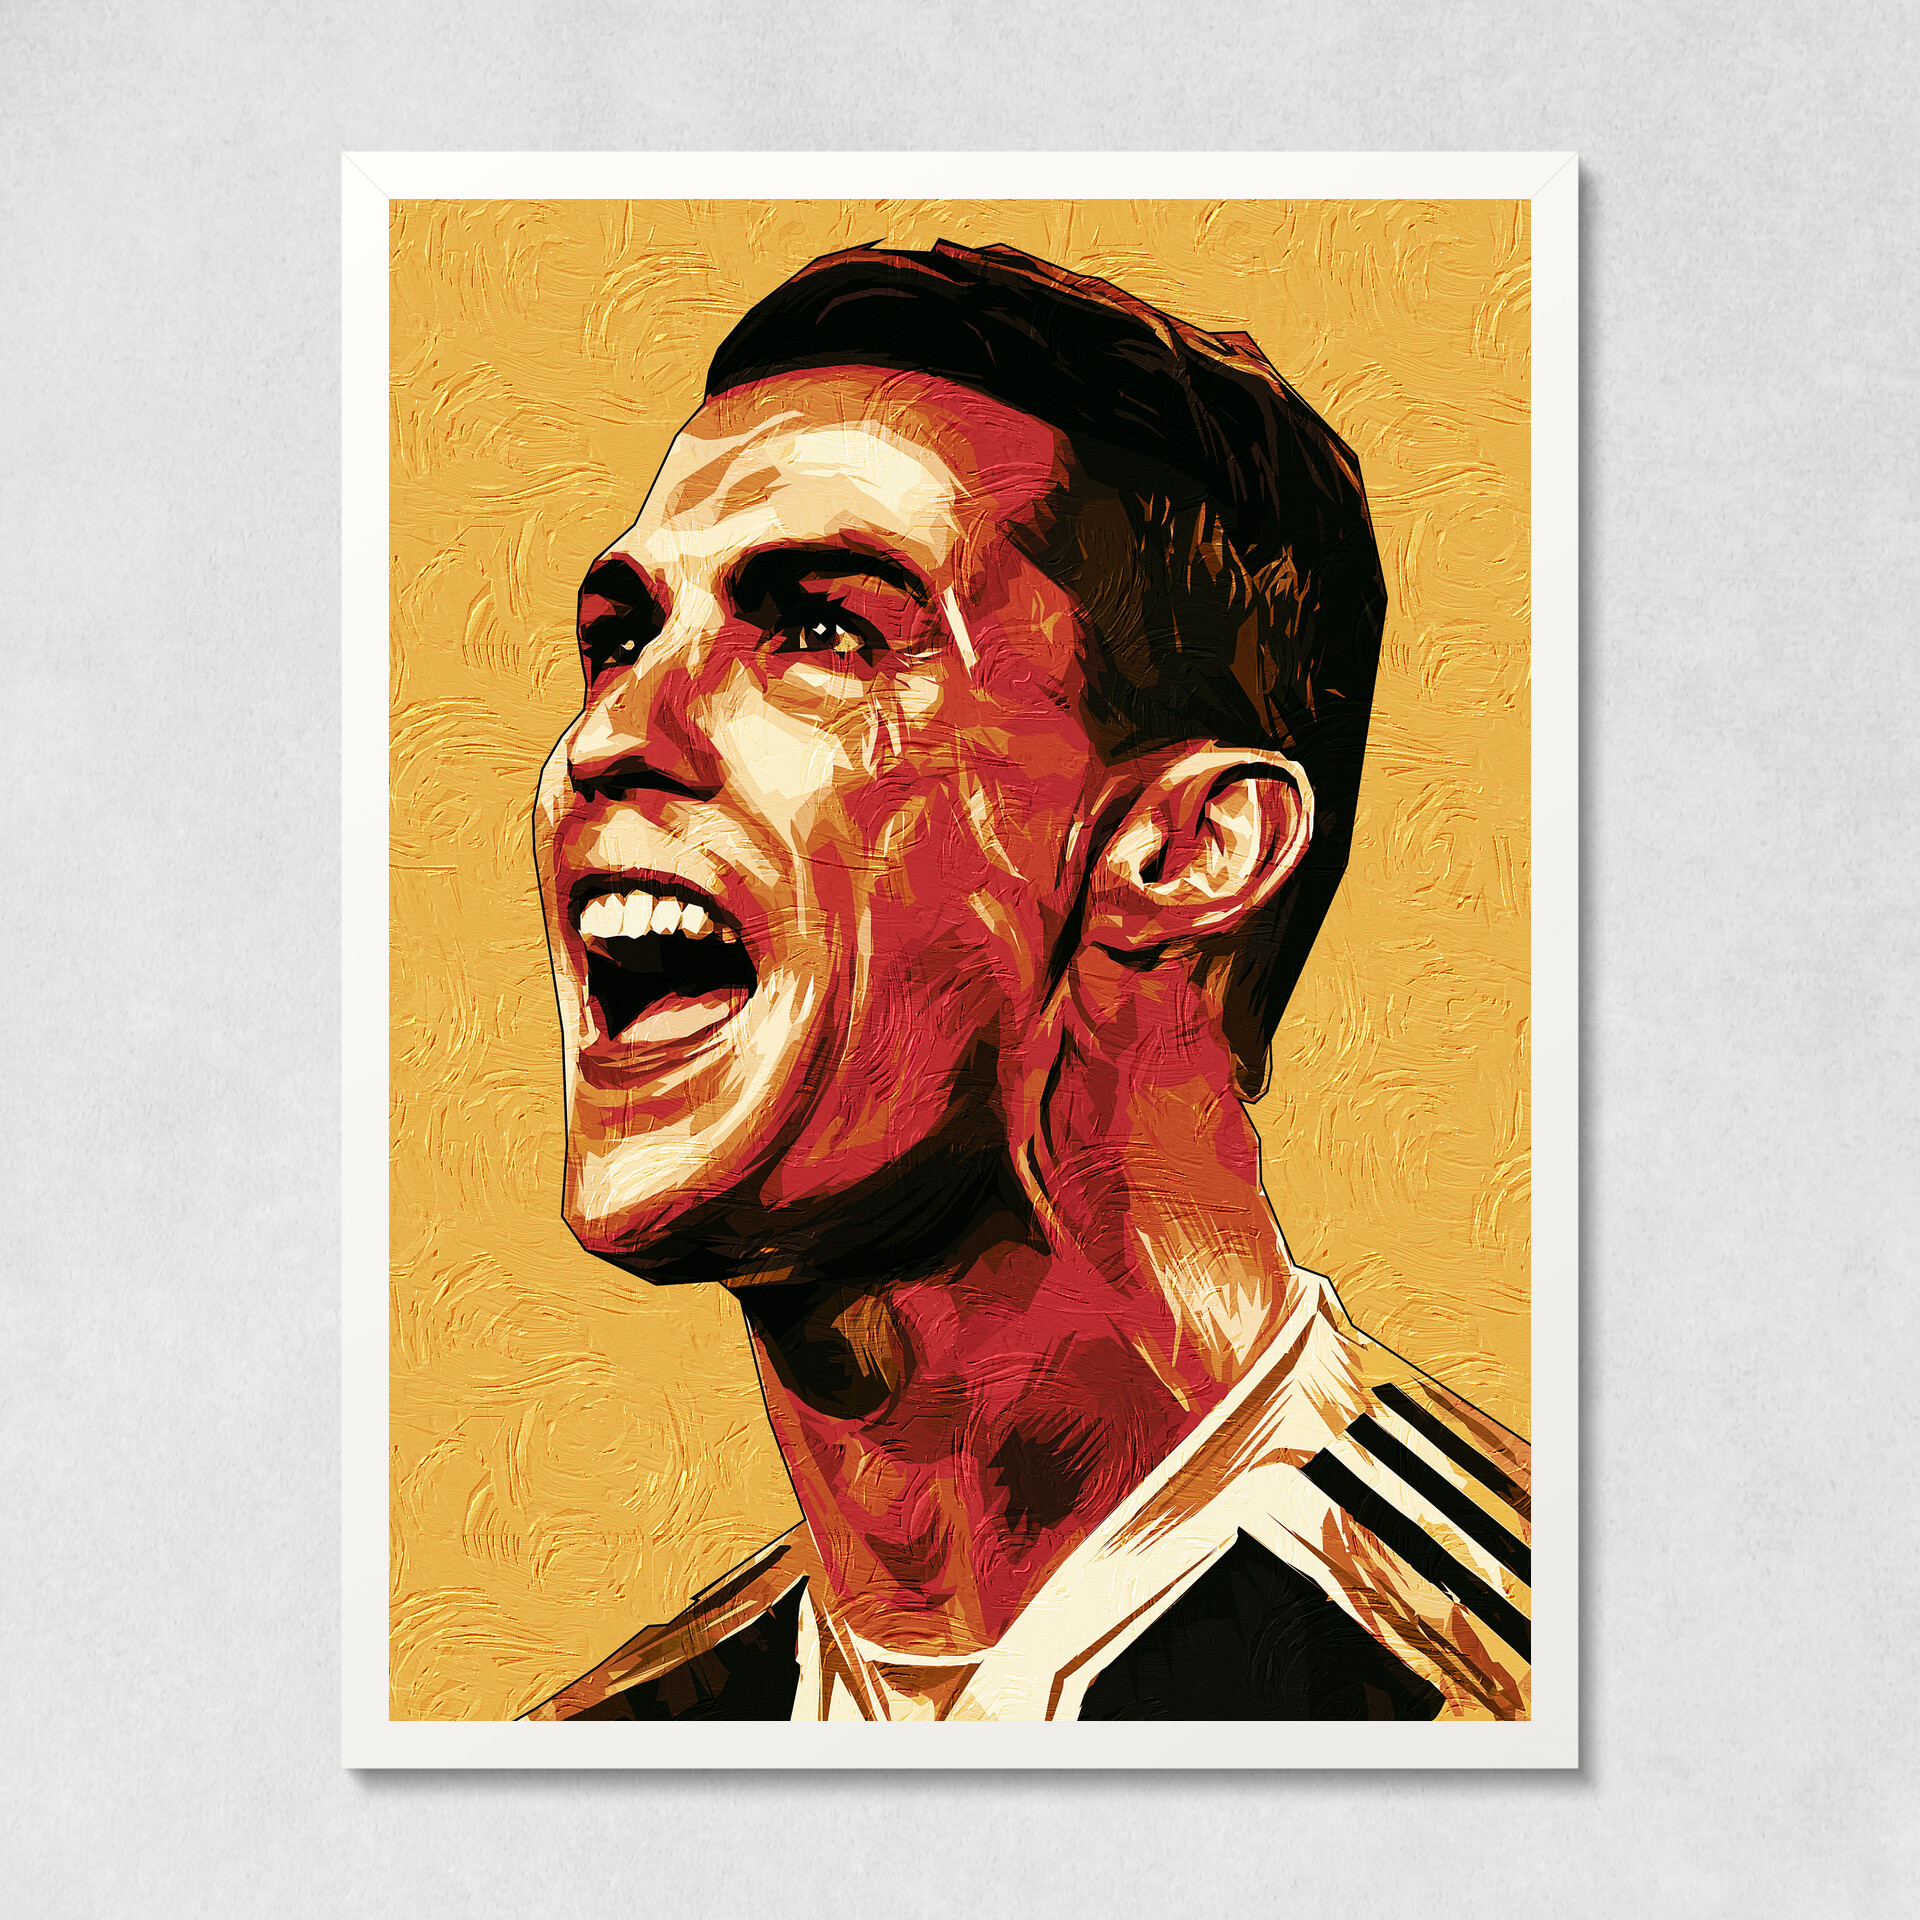 Cristiano Ronaldo cr7 pop art by giang